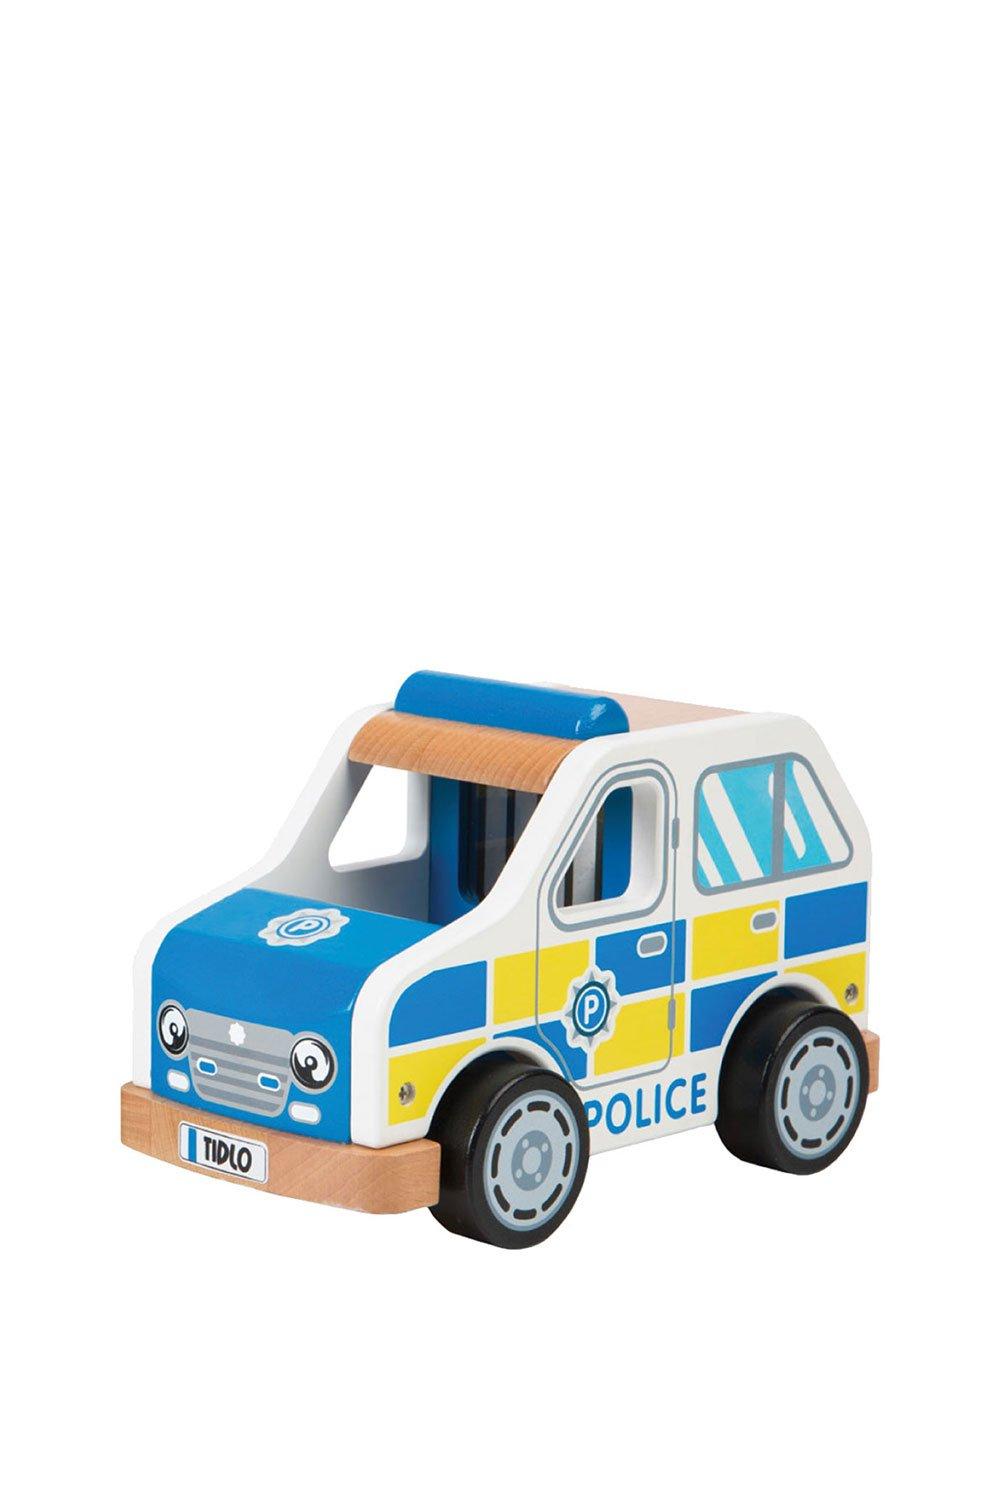 Tidlo Police Car Toy|blue